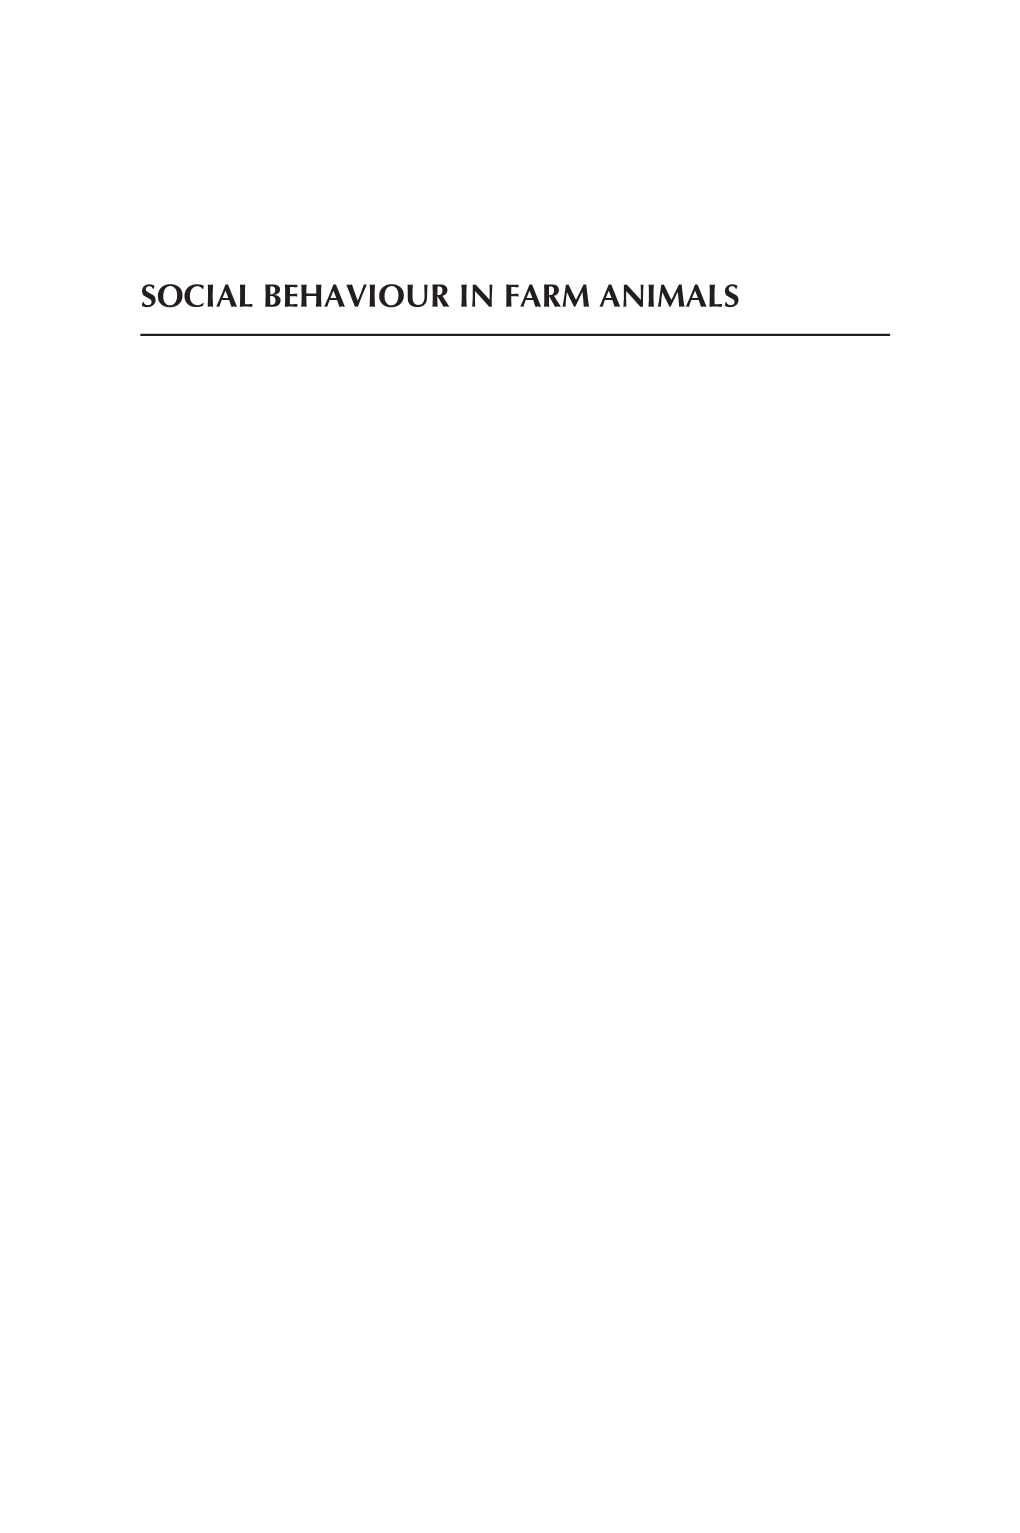 Social Behaviour in Farm Animals